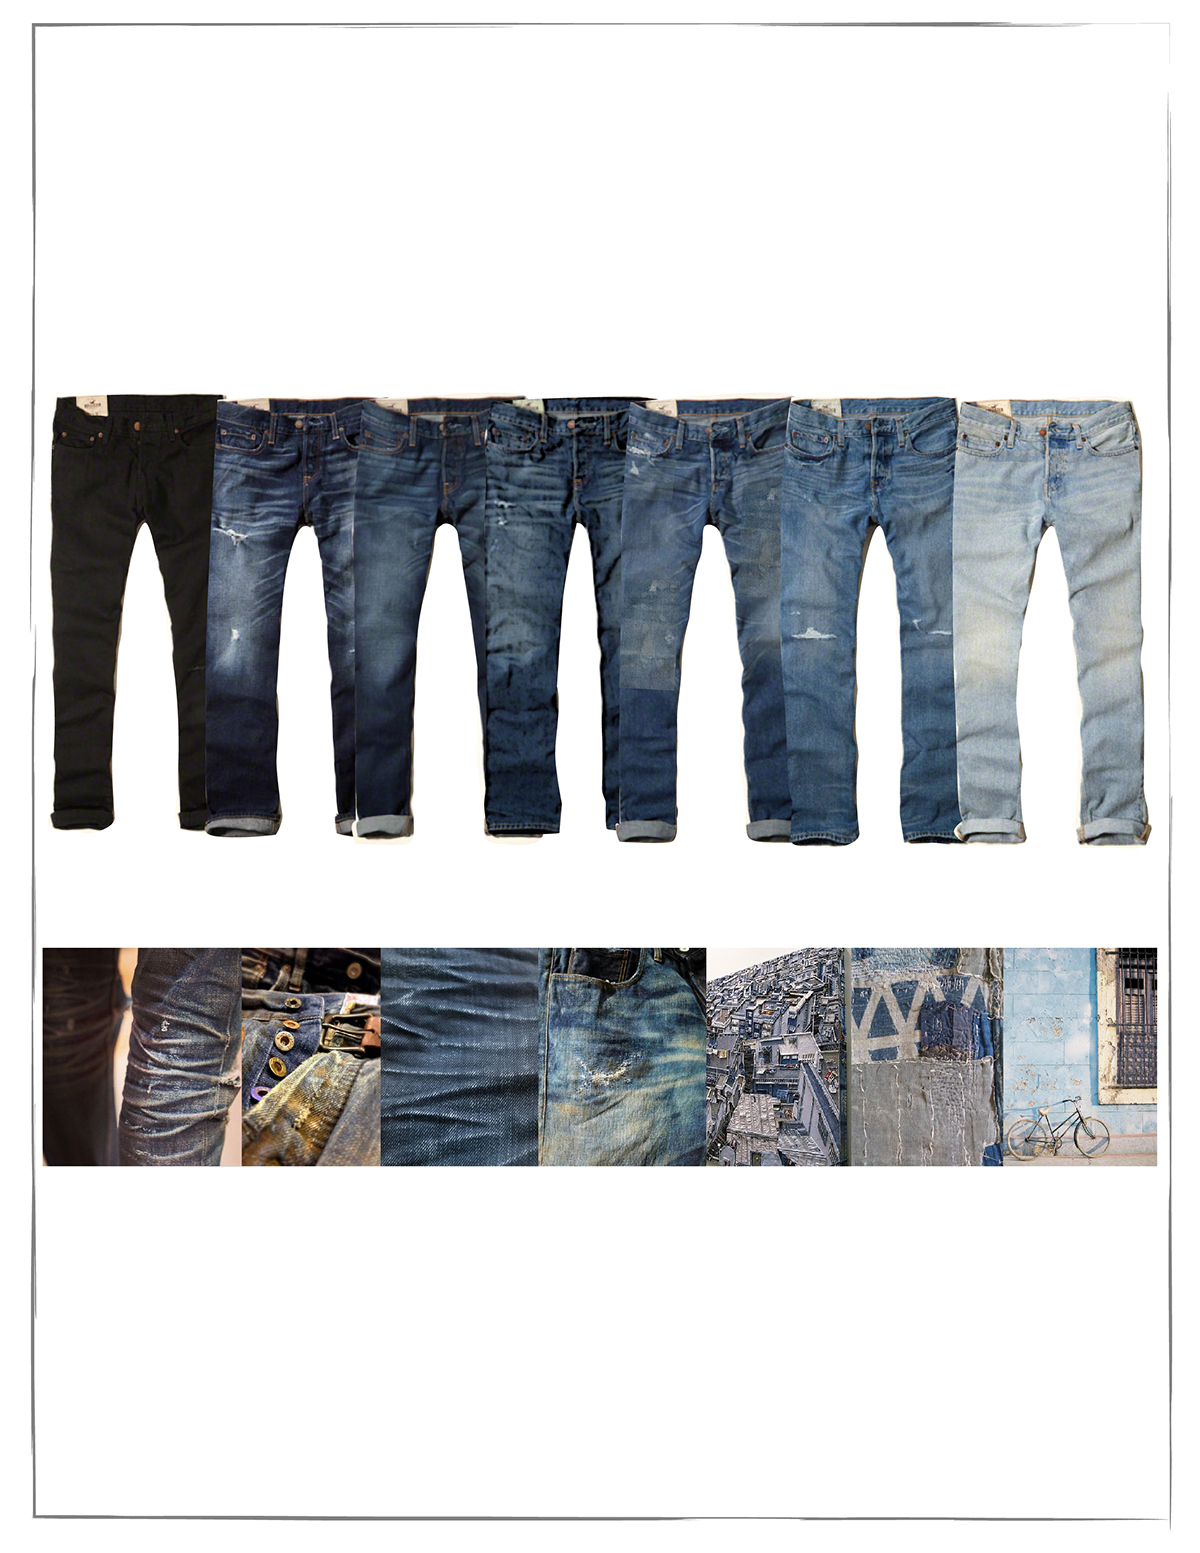 #denim #jeans #jean #hudson #truereligion #fashion #styling #inspire #indigo